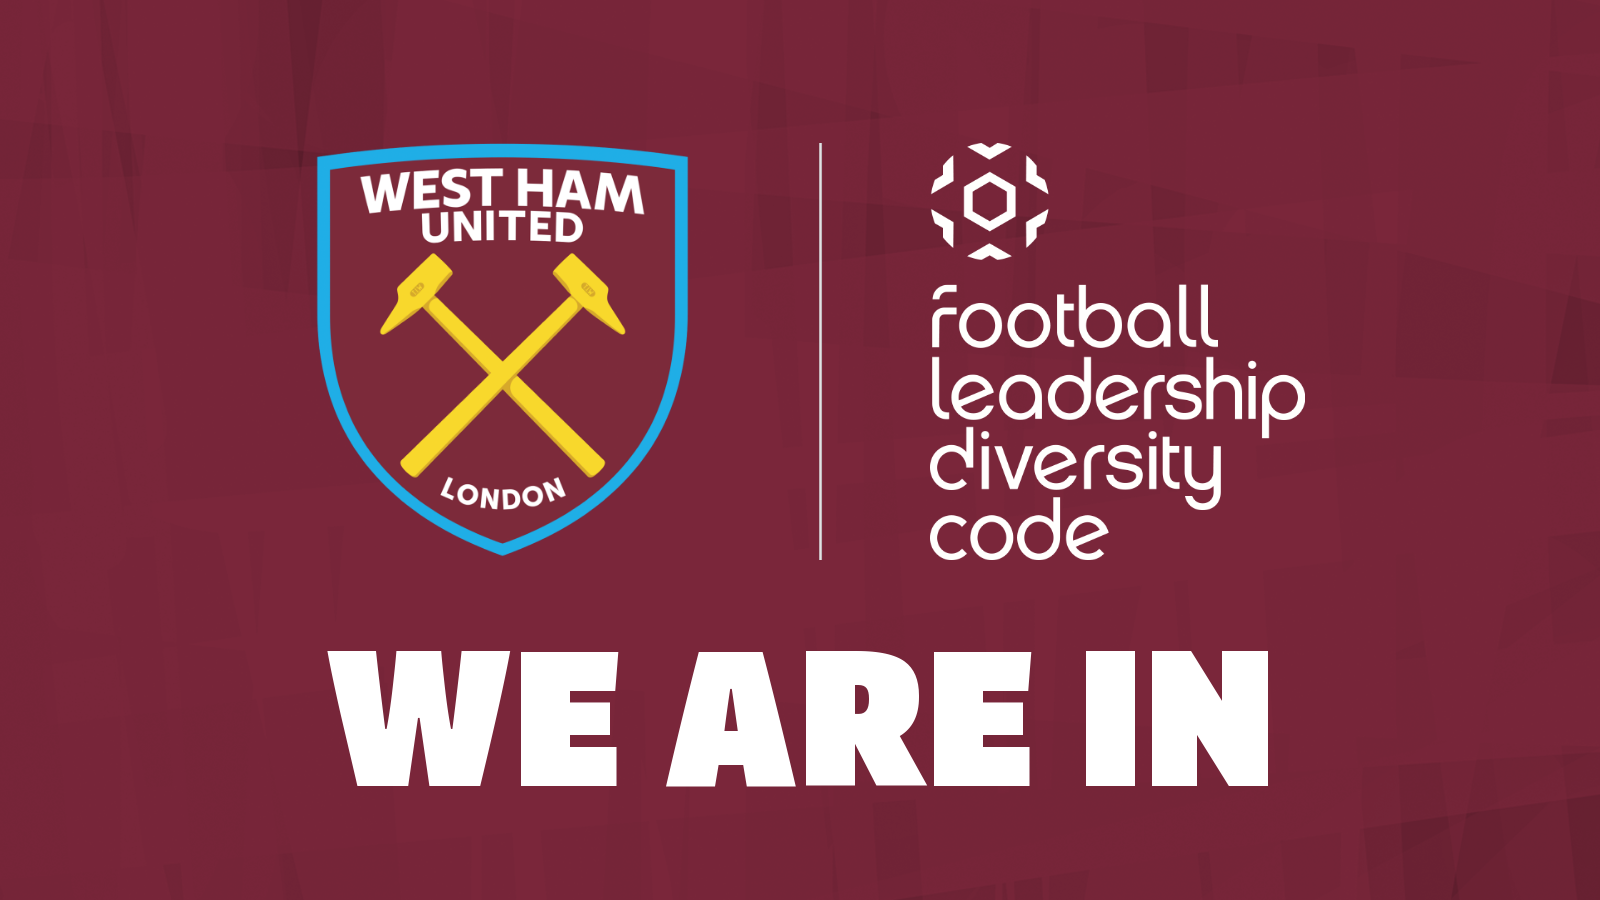 West Ham United adopt the FA’s Football Leadership Diversity Code